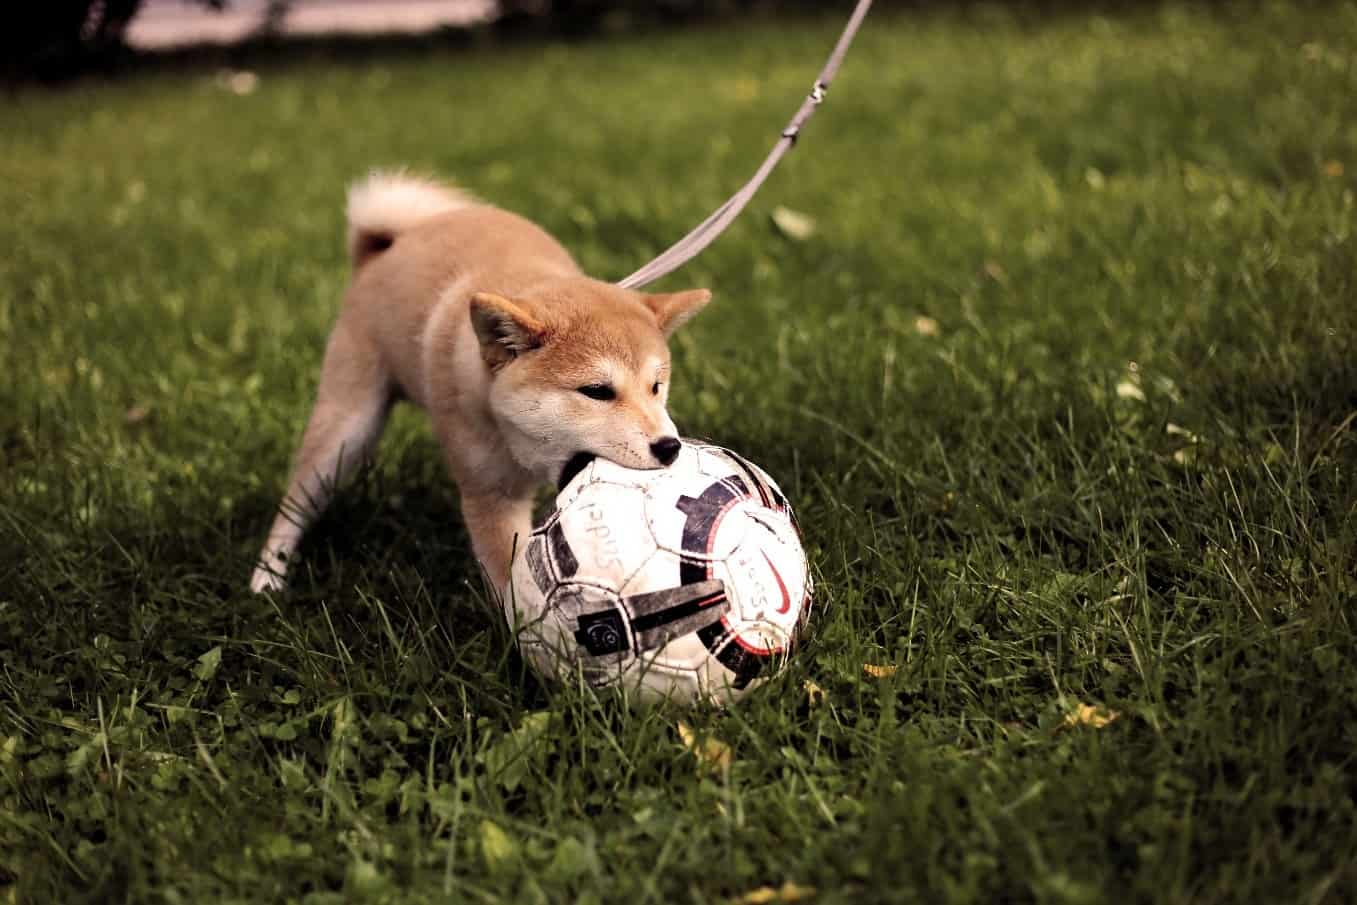 Shiba playing soccer